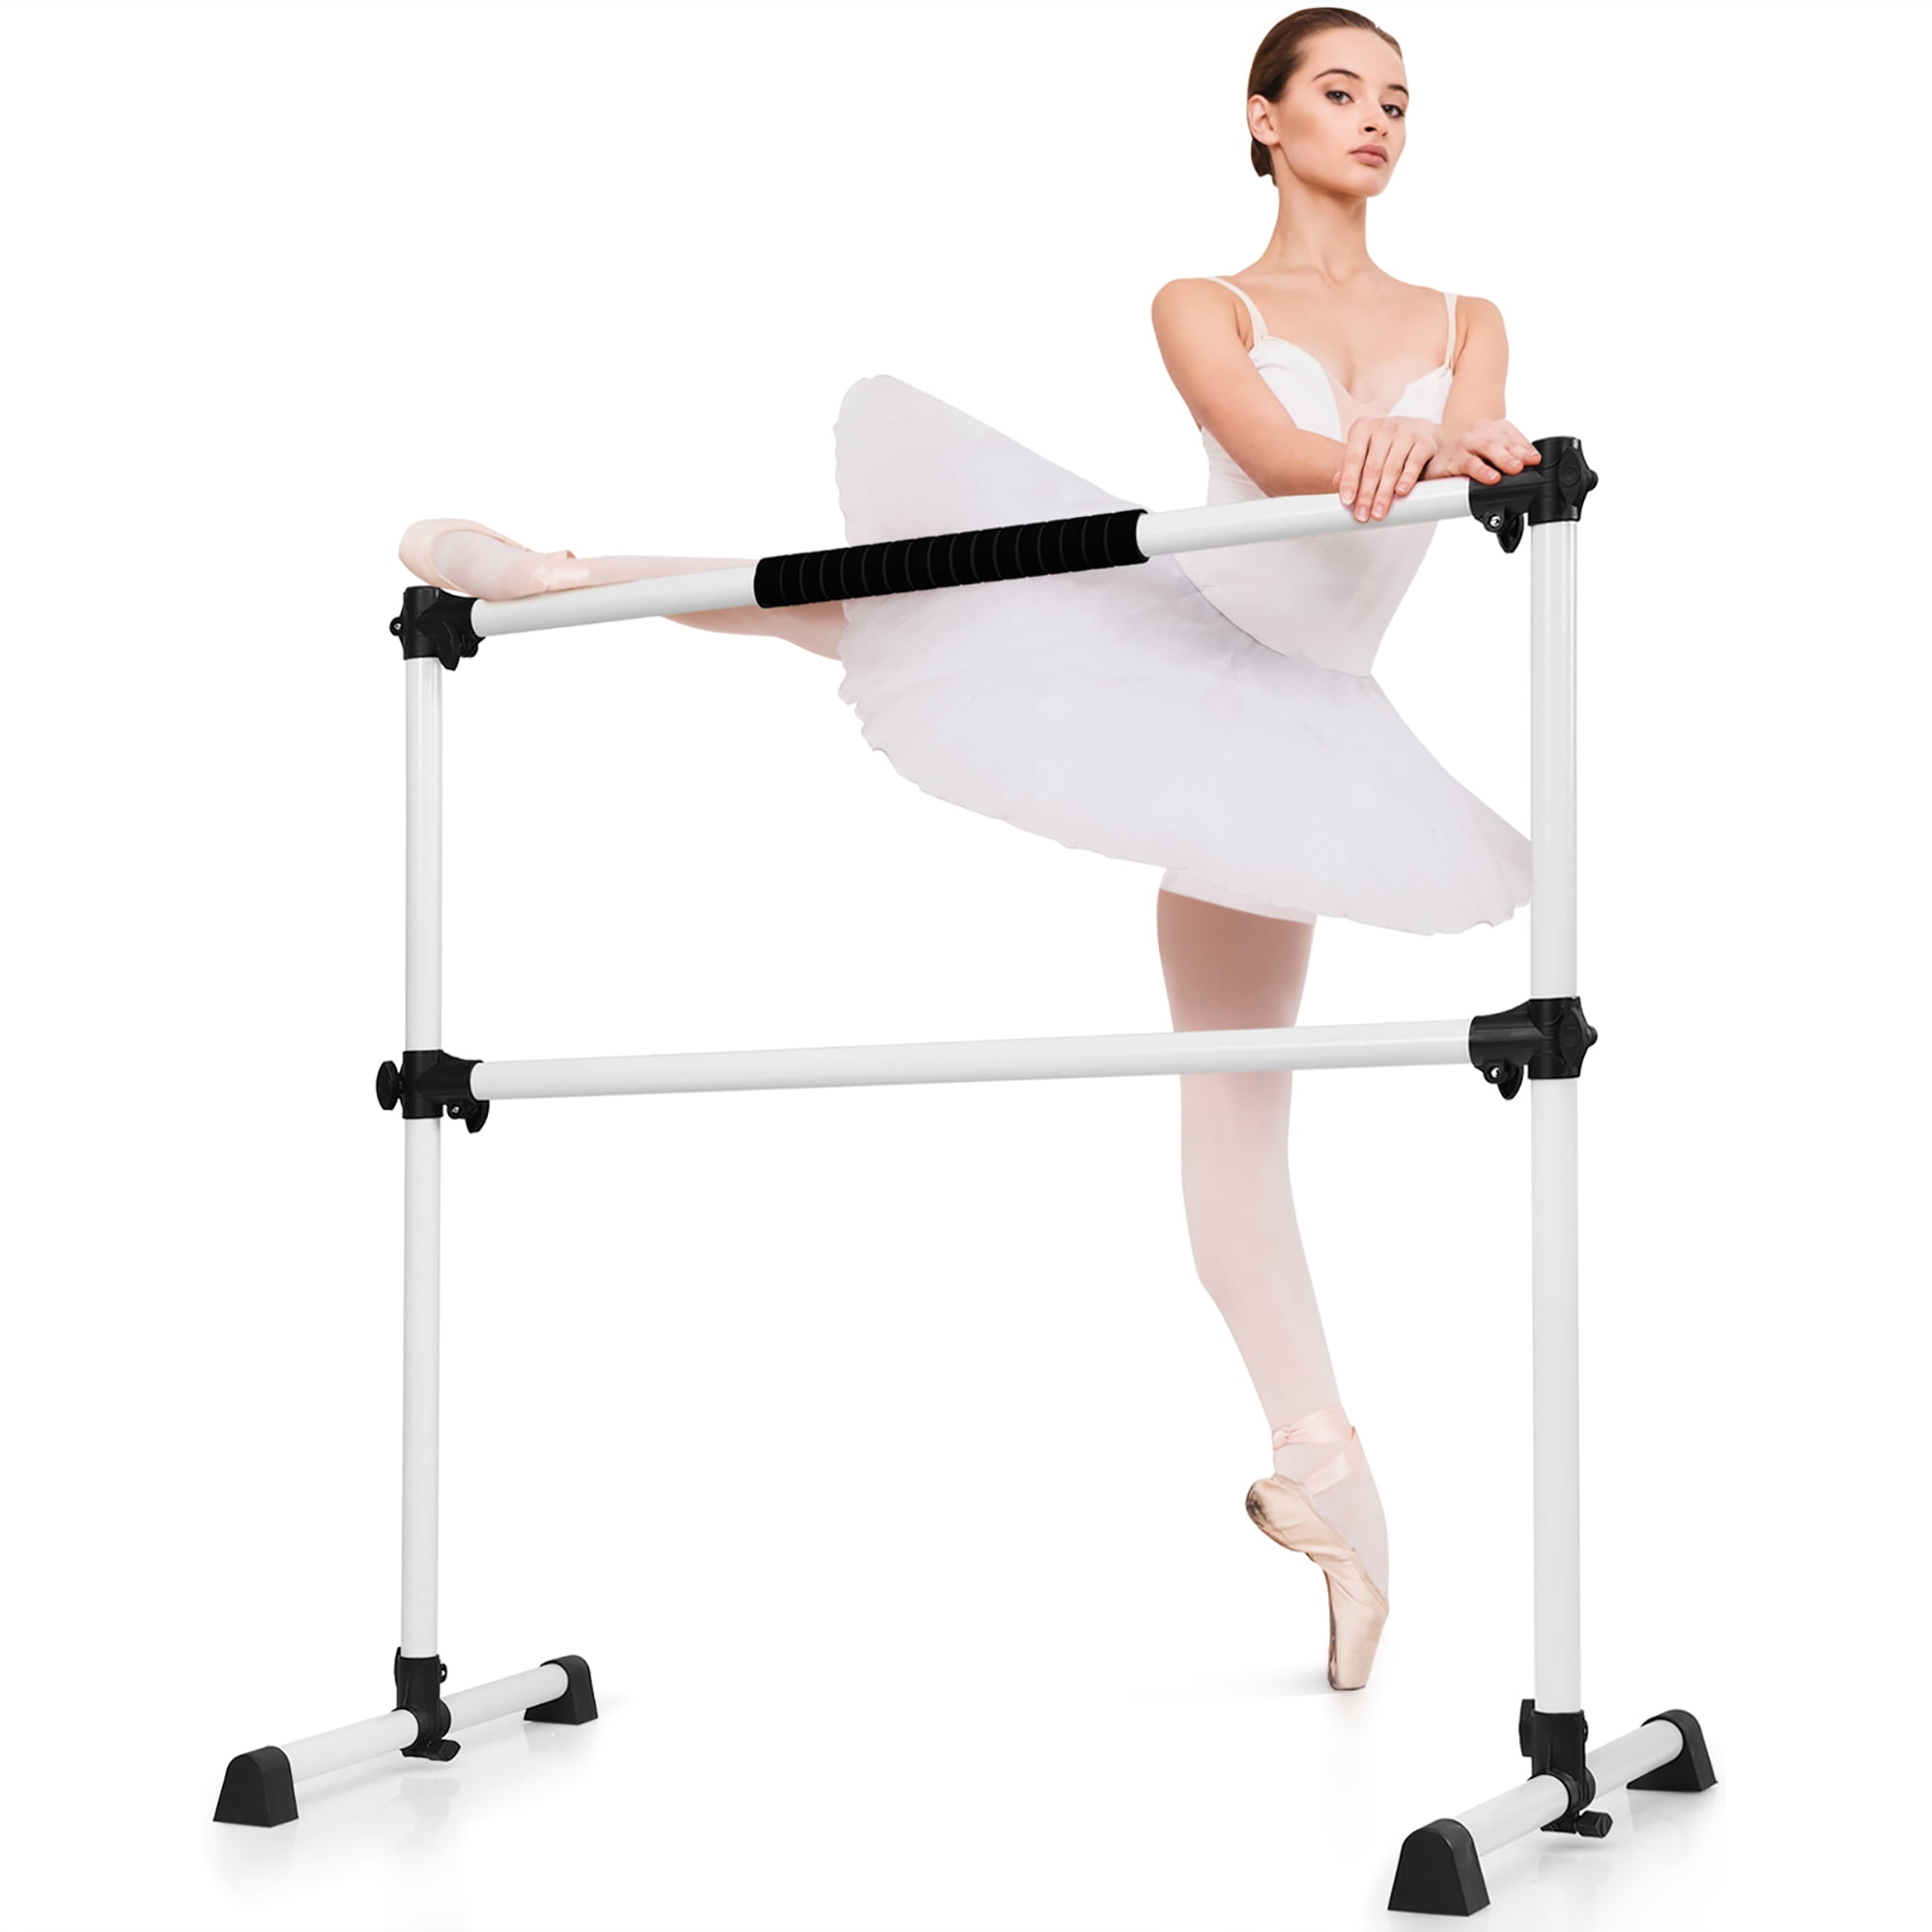 Details about   4 Ft Portable Ballet Freestanding Adjustable Double Dance Bar Multiple Color New 